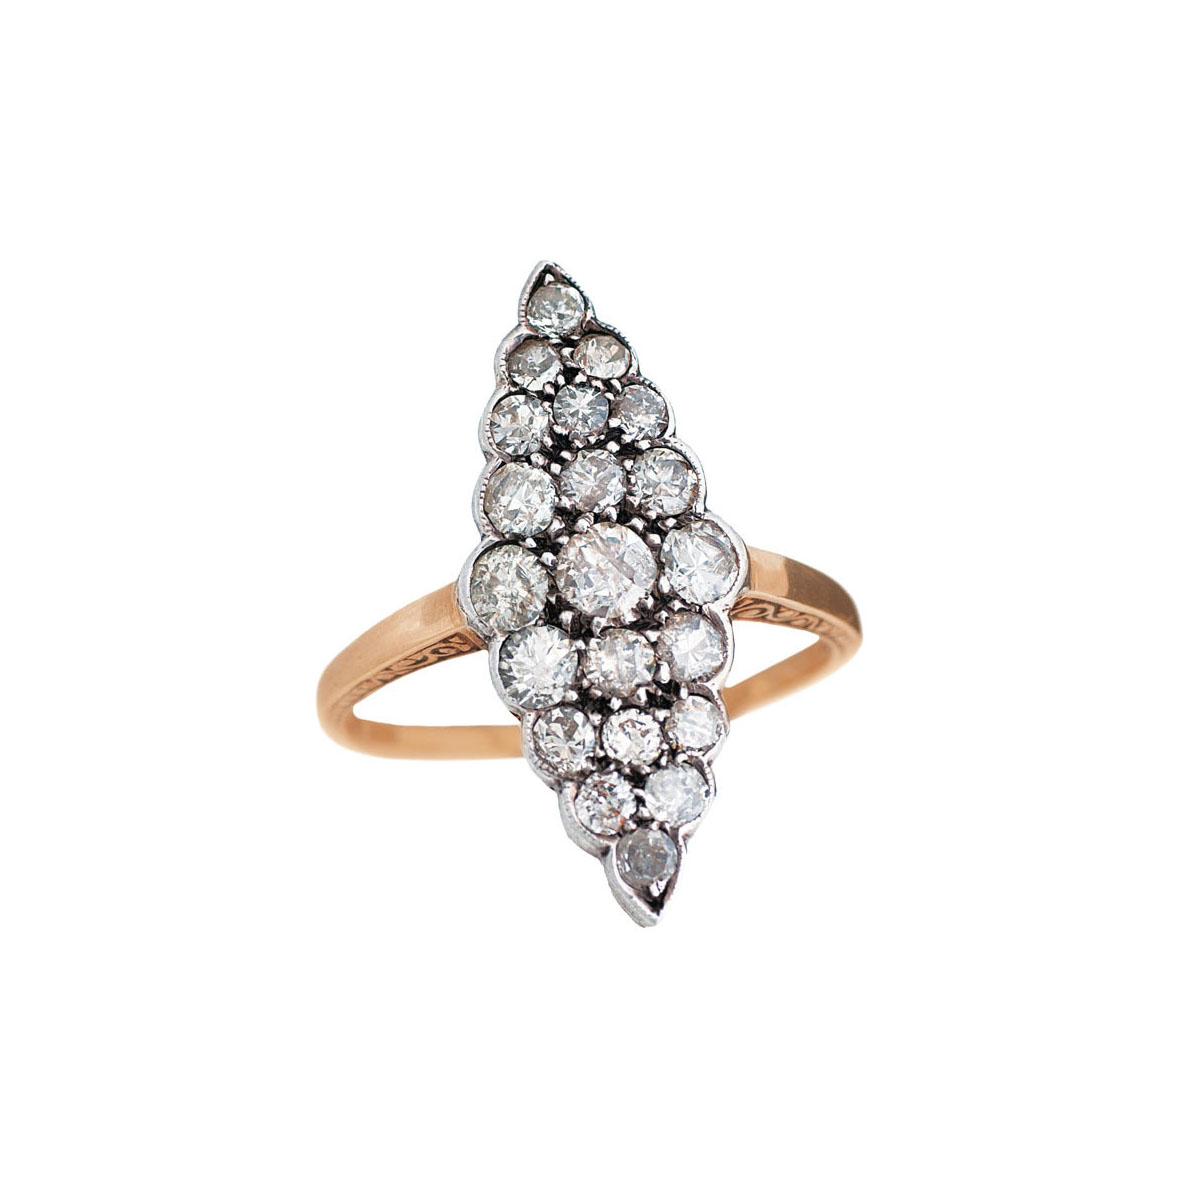 An art nouveau  navette shaped diamond ring